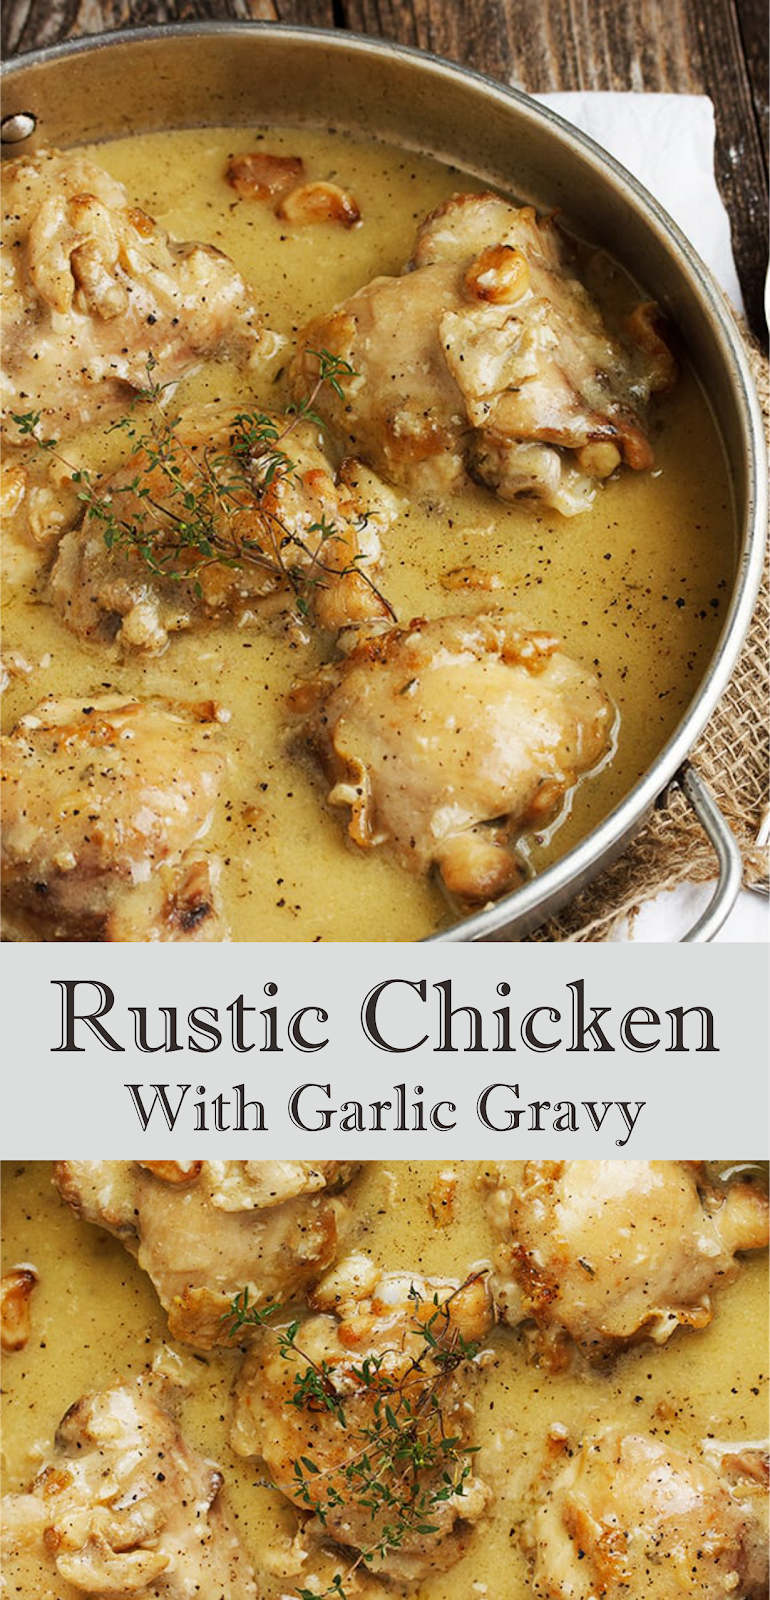 Rustic Chicken With Garlic Gravy | Think food